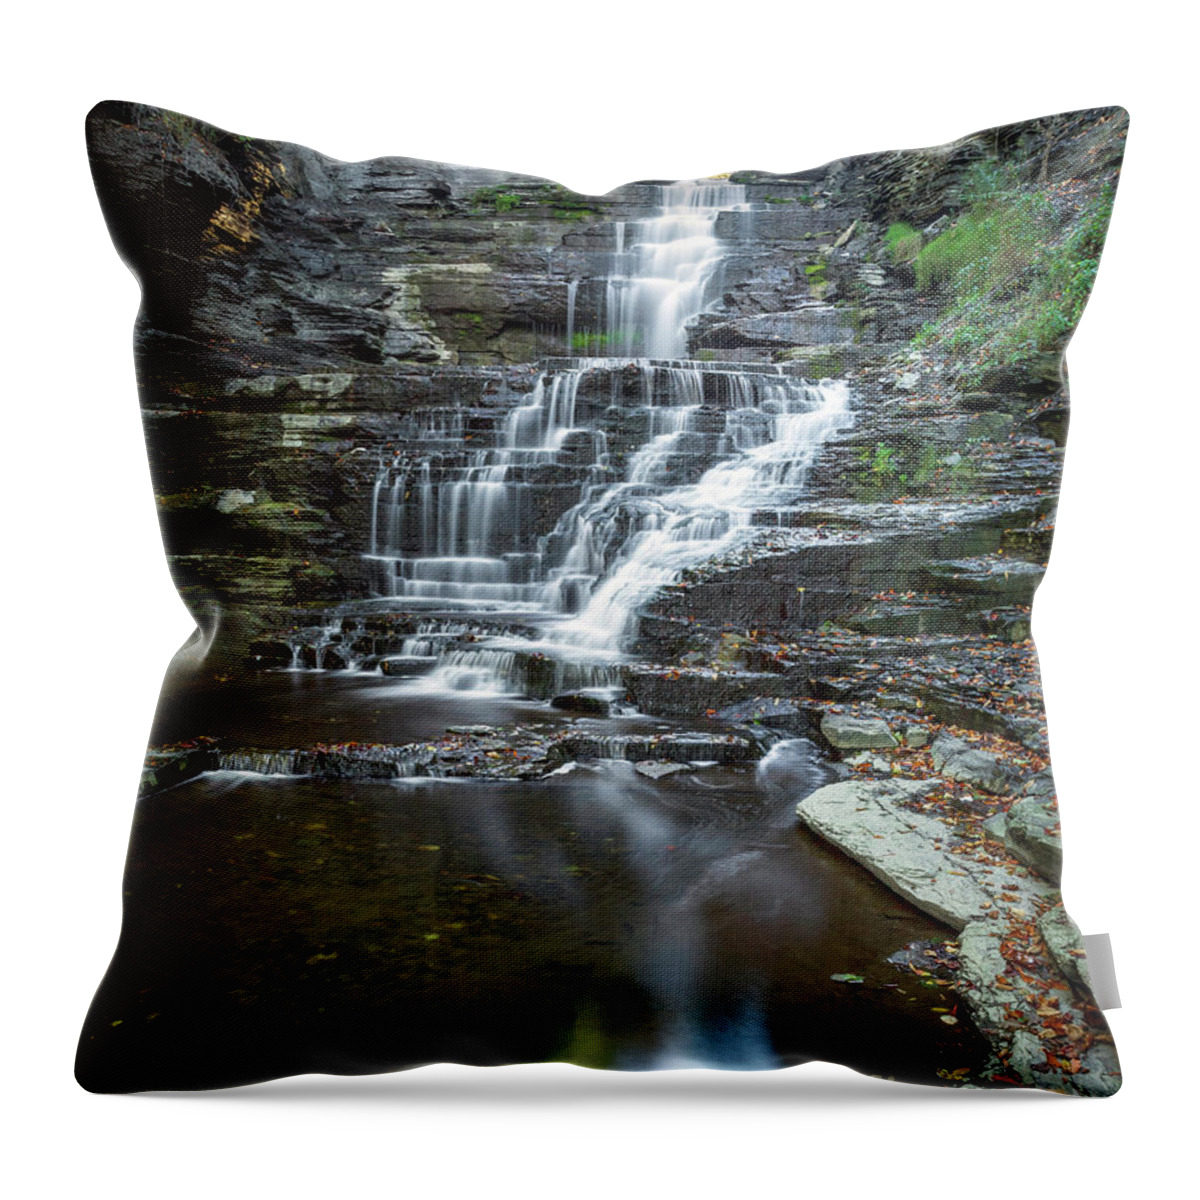 New York Throw Pillow featuring the photograph Falls Creek Gorge Trail Reflection by Karen Jorstad